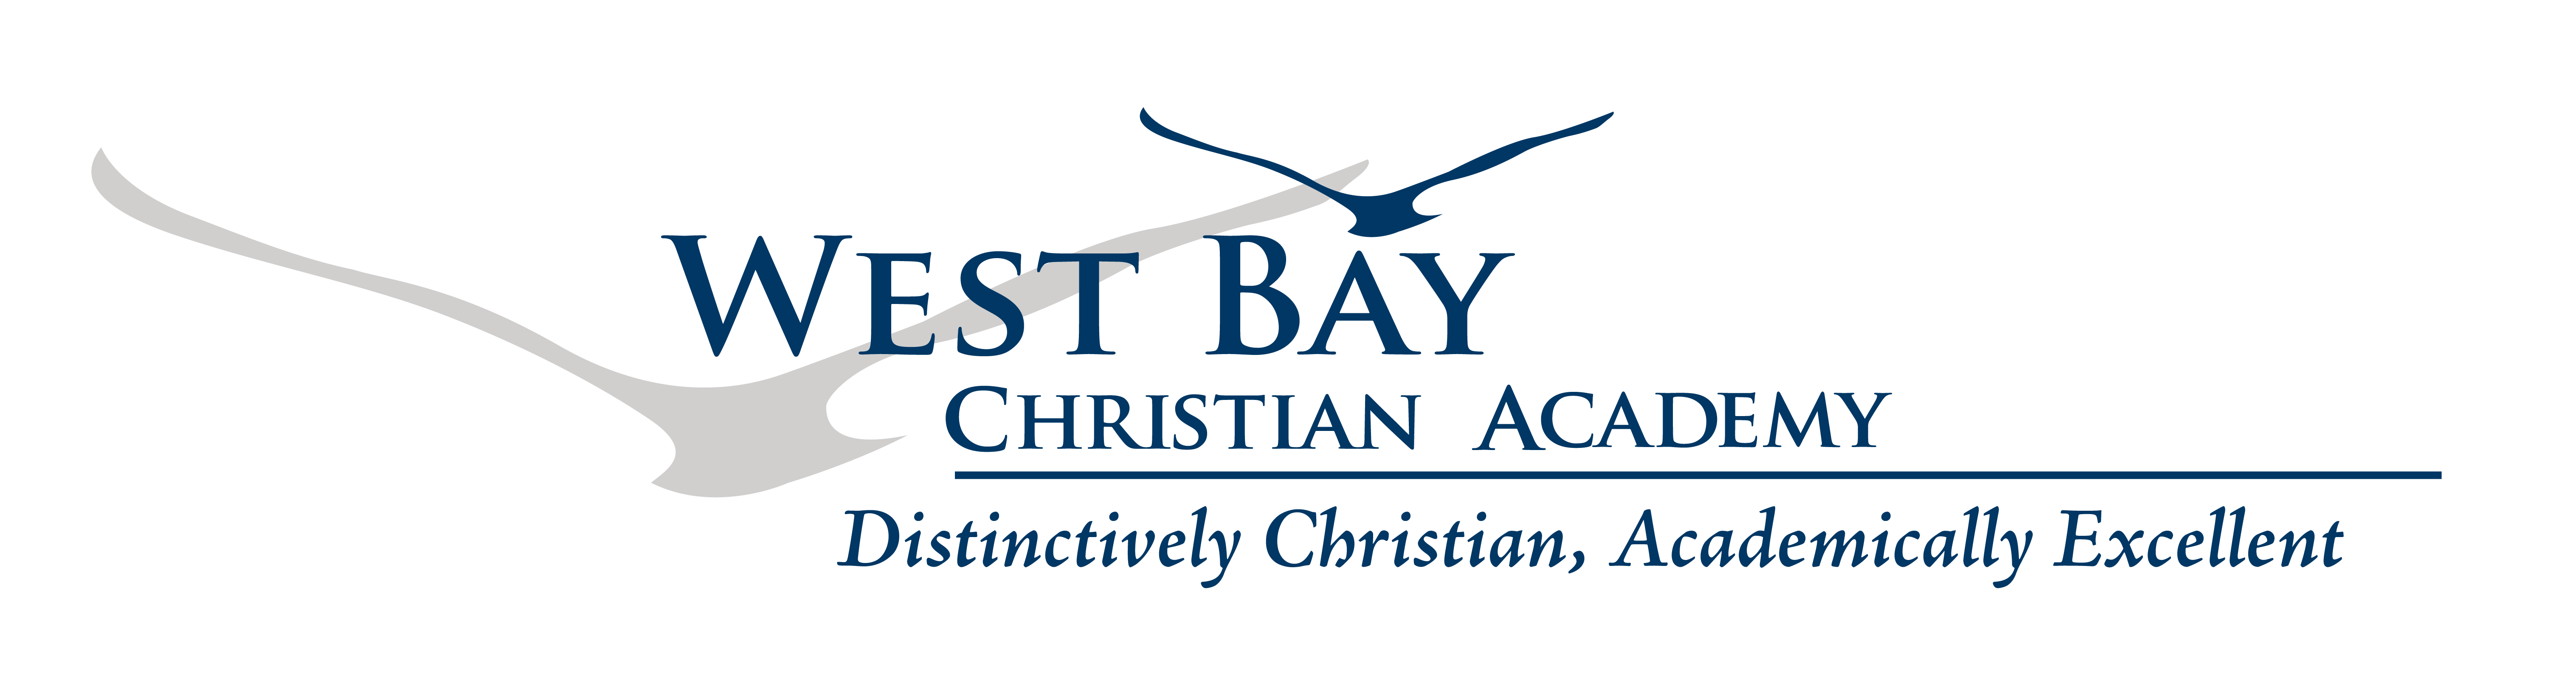 West Bay Christian Academy Logo